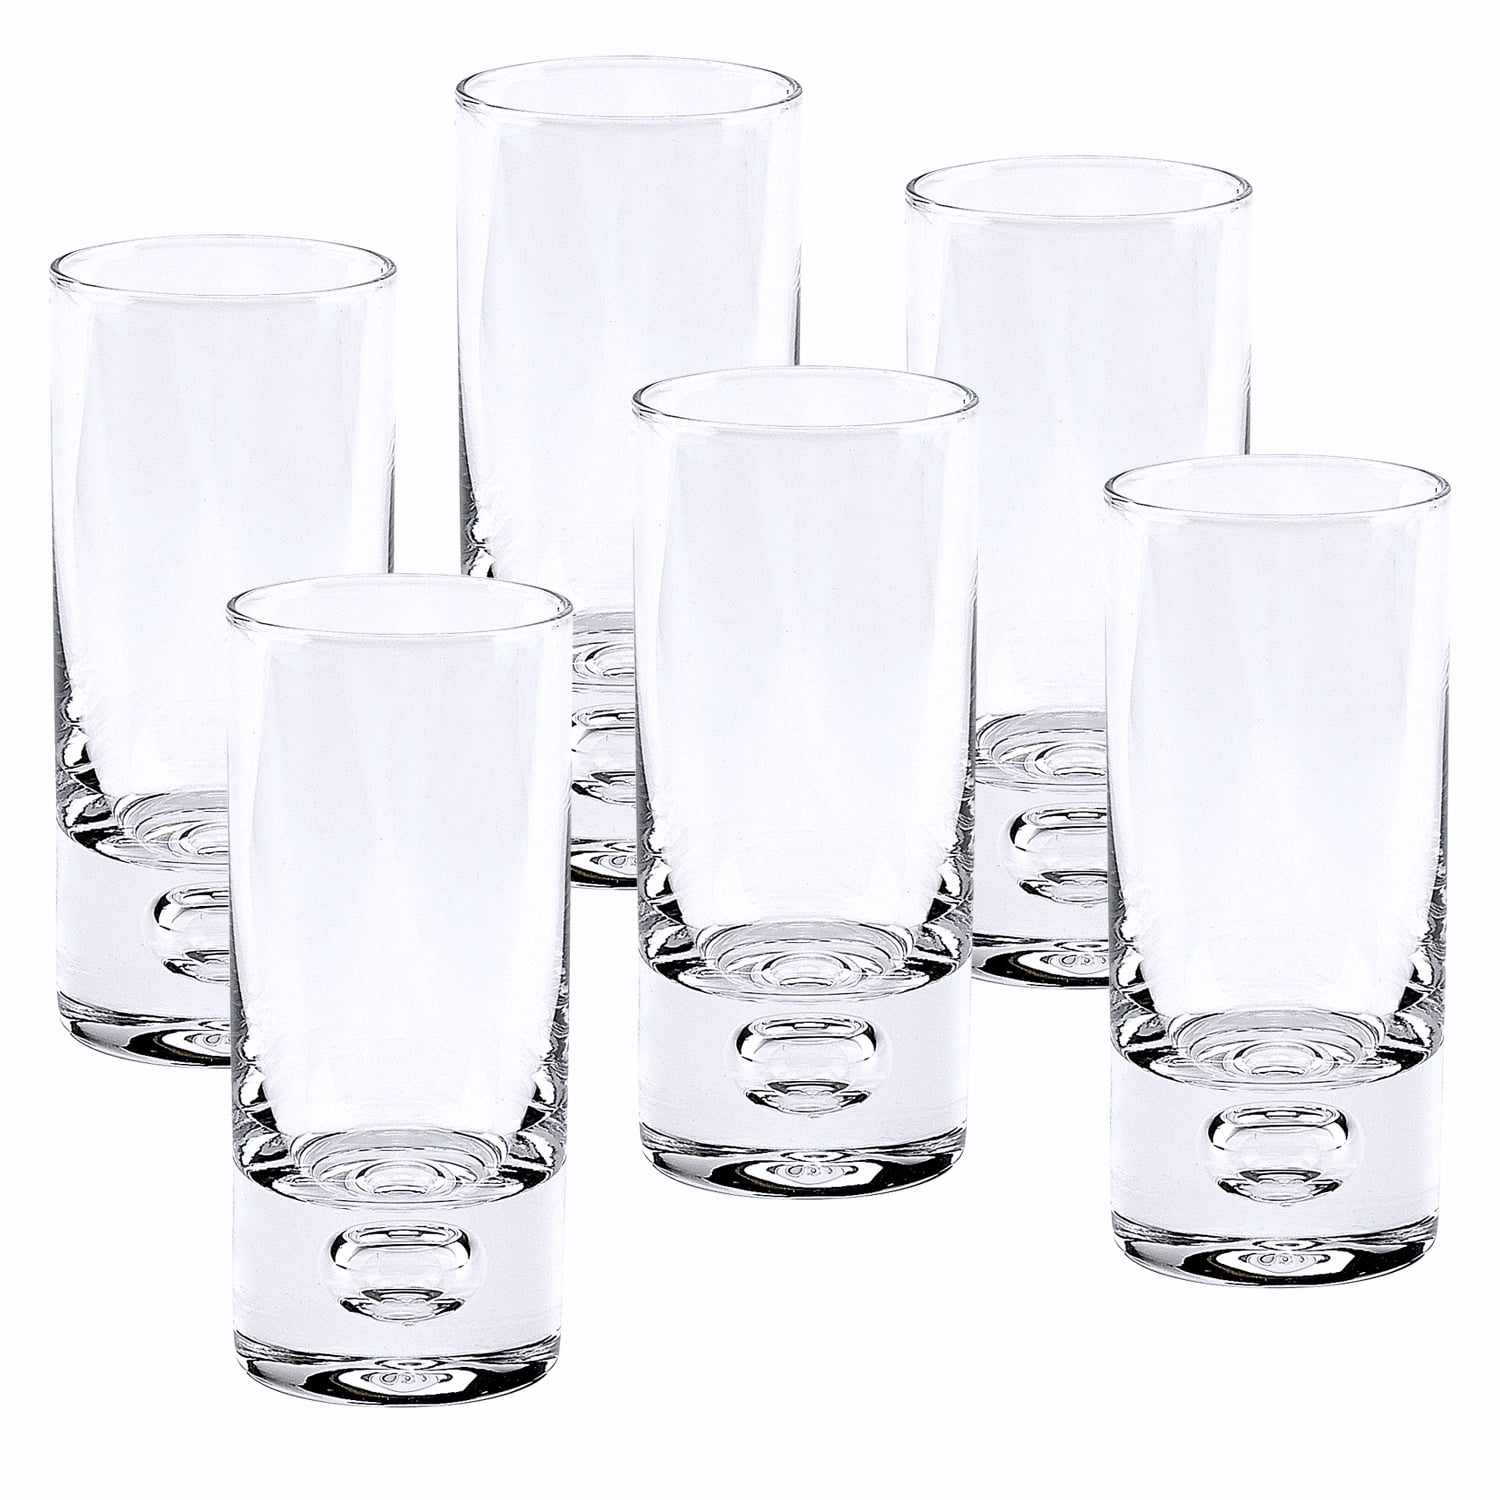 Set of 6 Glasses 1.7 fl oz each Vodka Hard Liquor Glass 6 Crystal Shot Glasses 